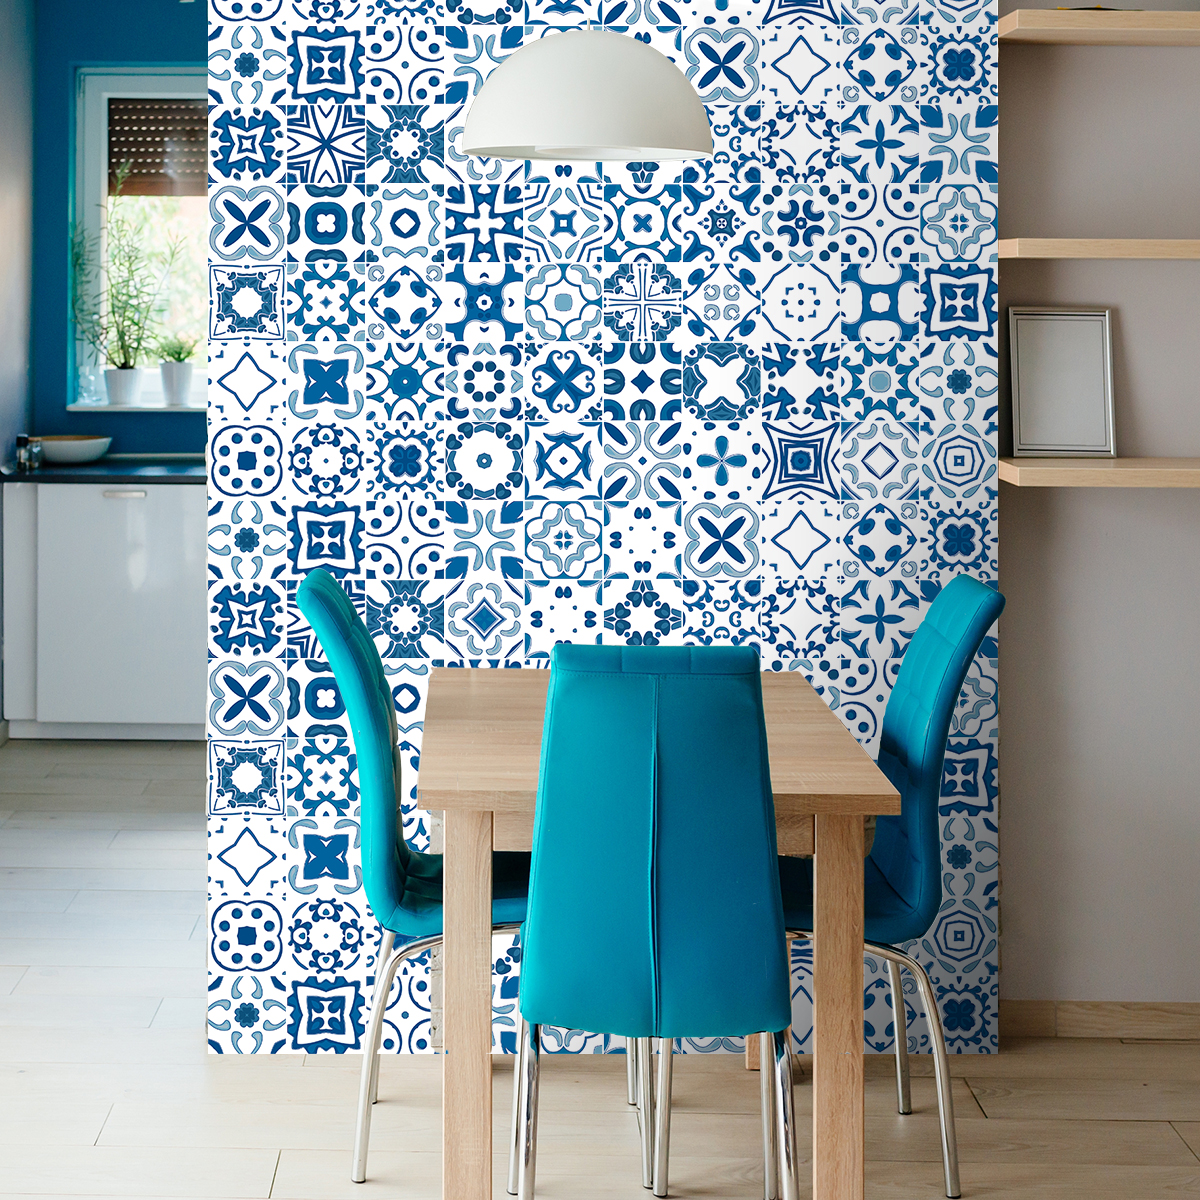 60 wall decal tiles azulejos ursulia